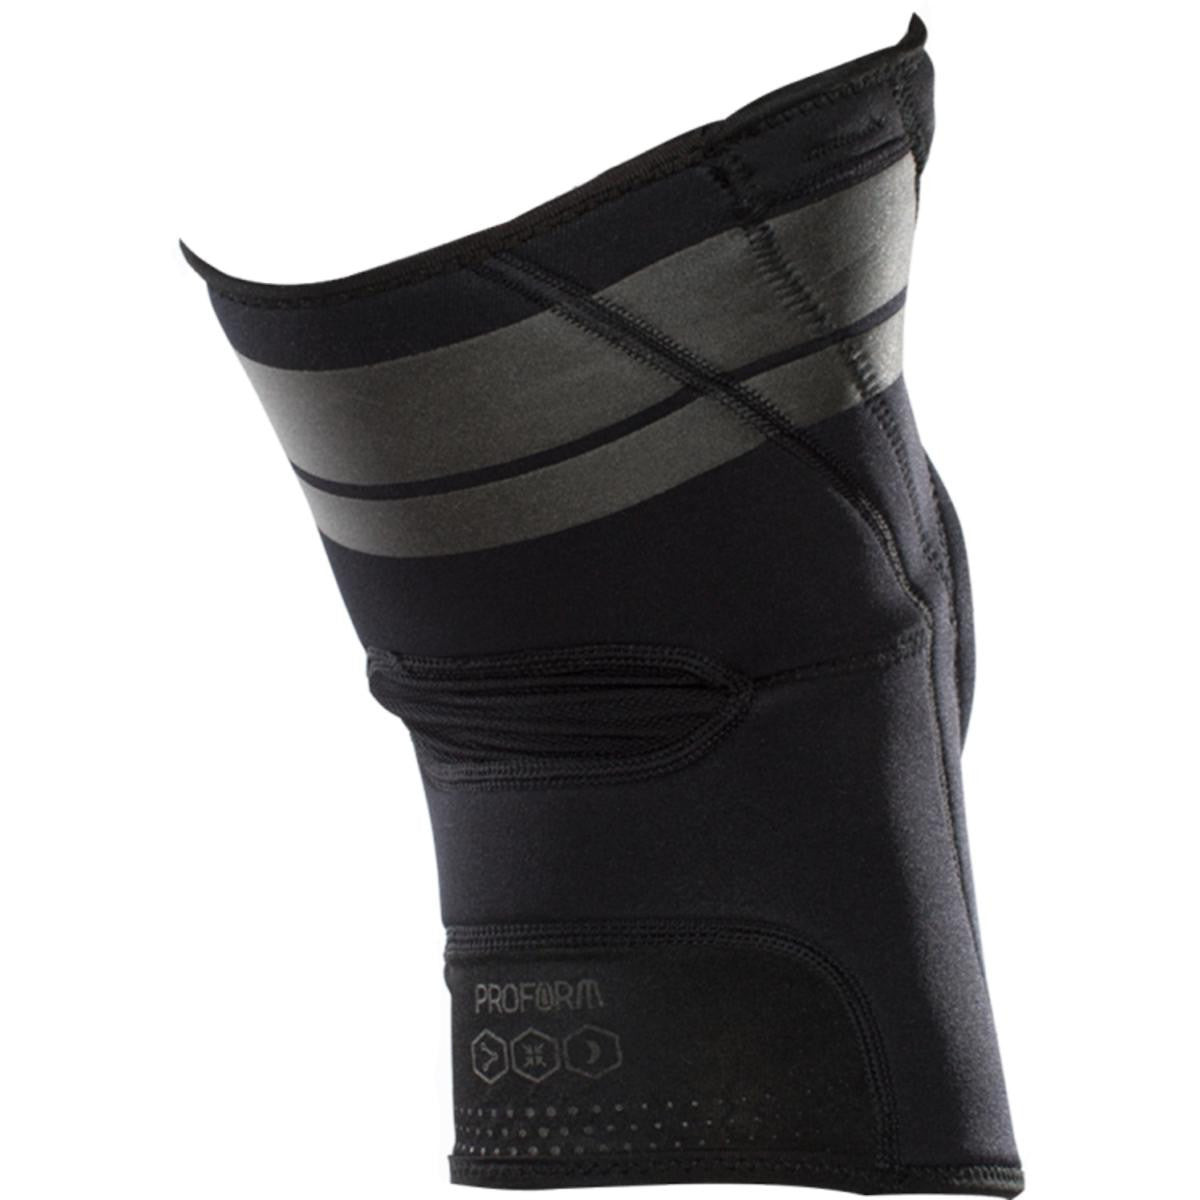 DonJoy Proform Knee Sleeve (2mm, Closed Patella)